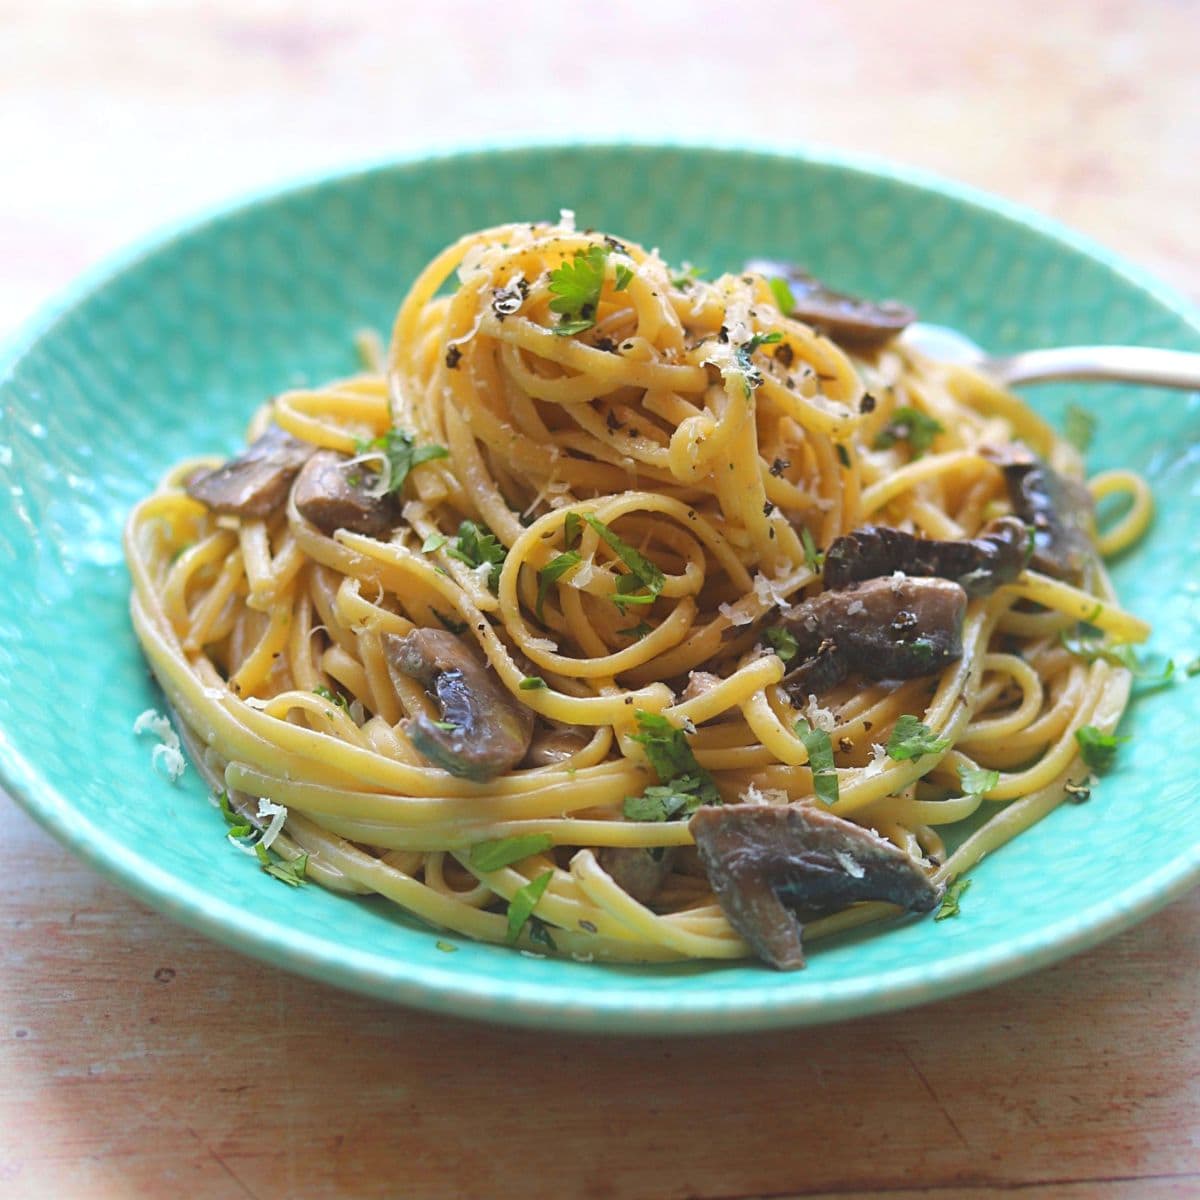 Creamy Gorgonzola Pasta With Mushrooms Recipe on Food52